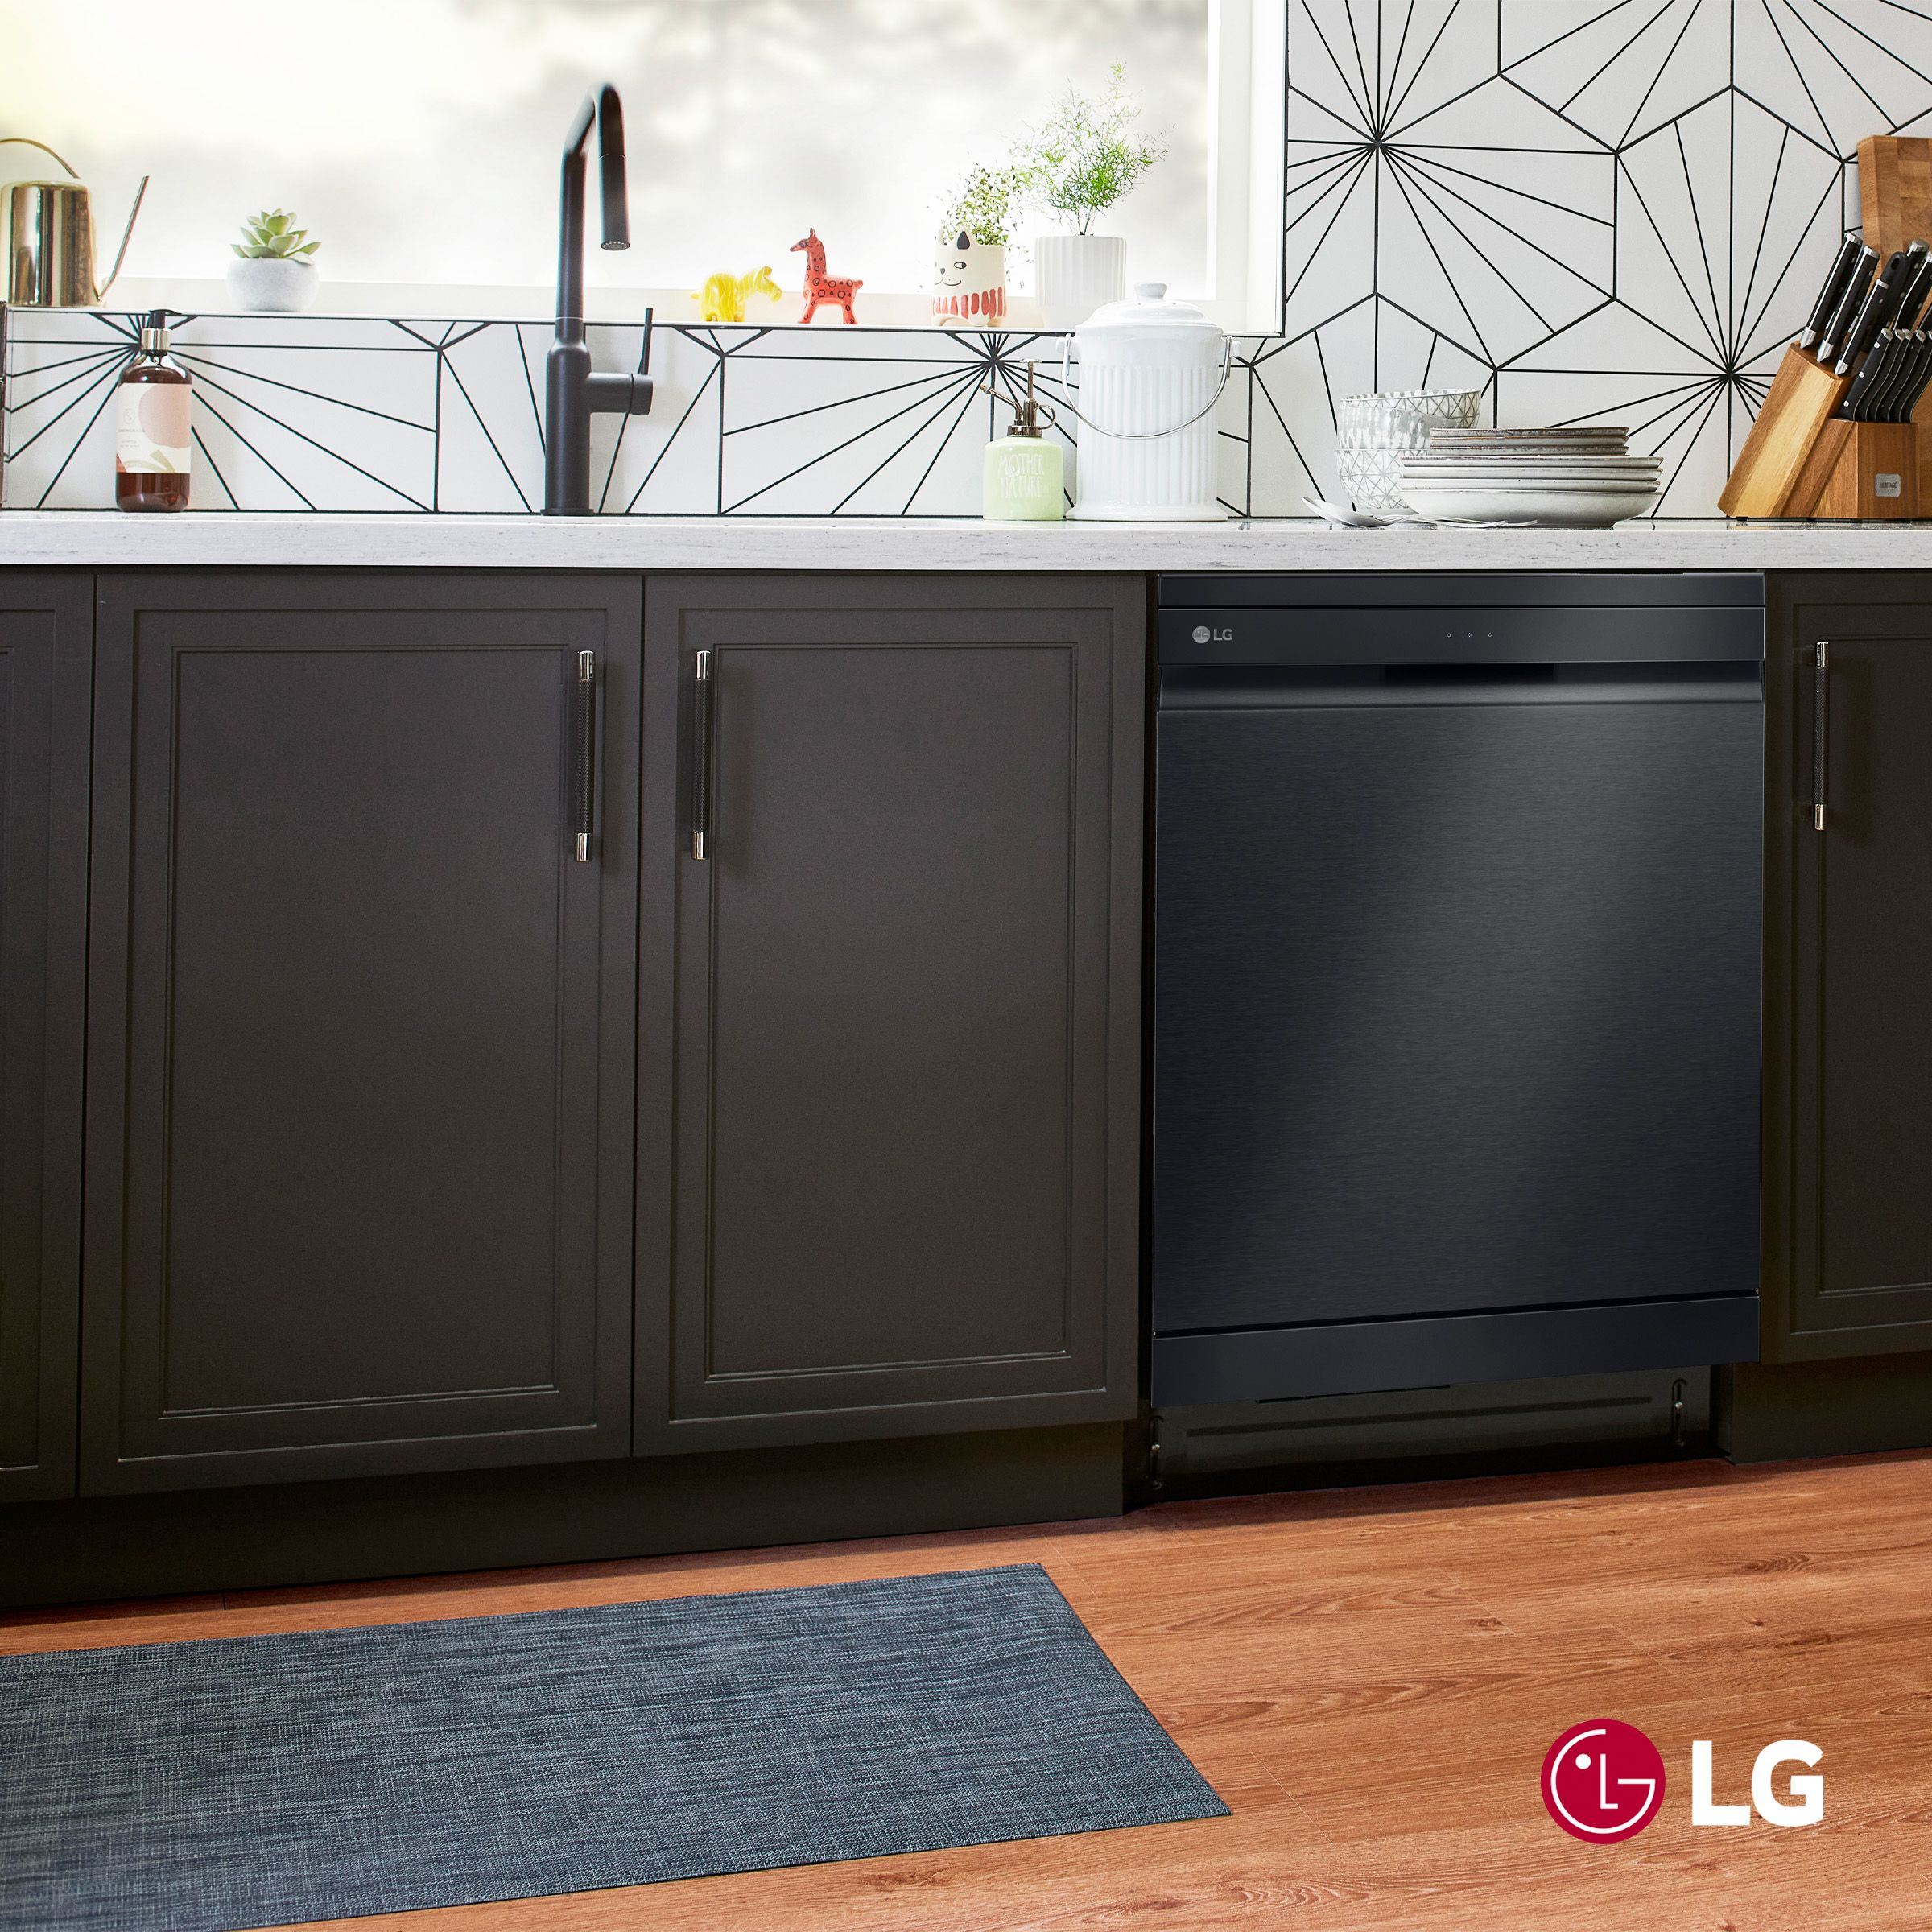 LG Dishwashers with TrueSteam™